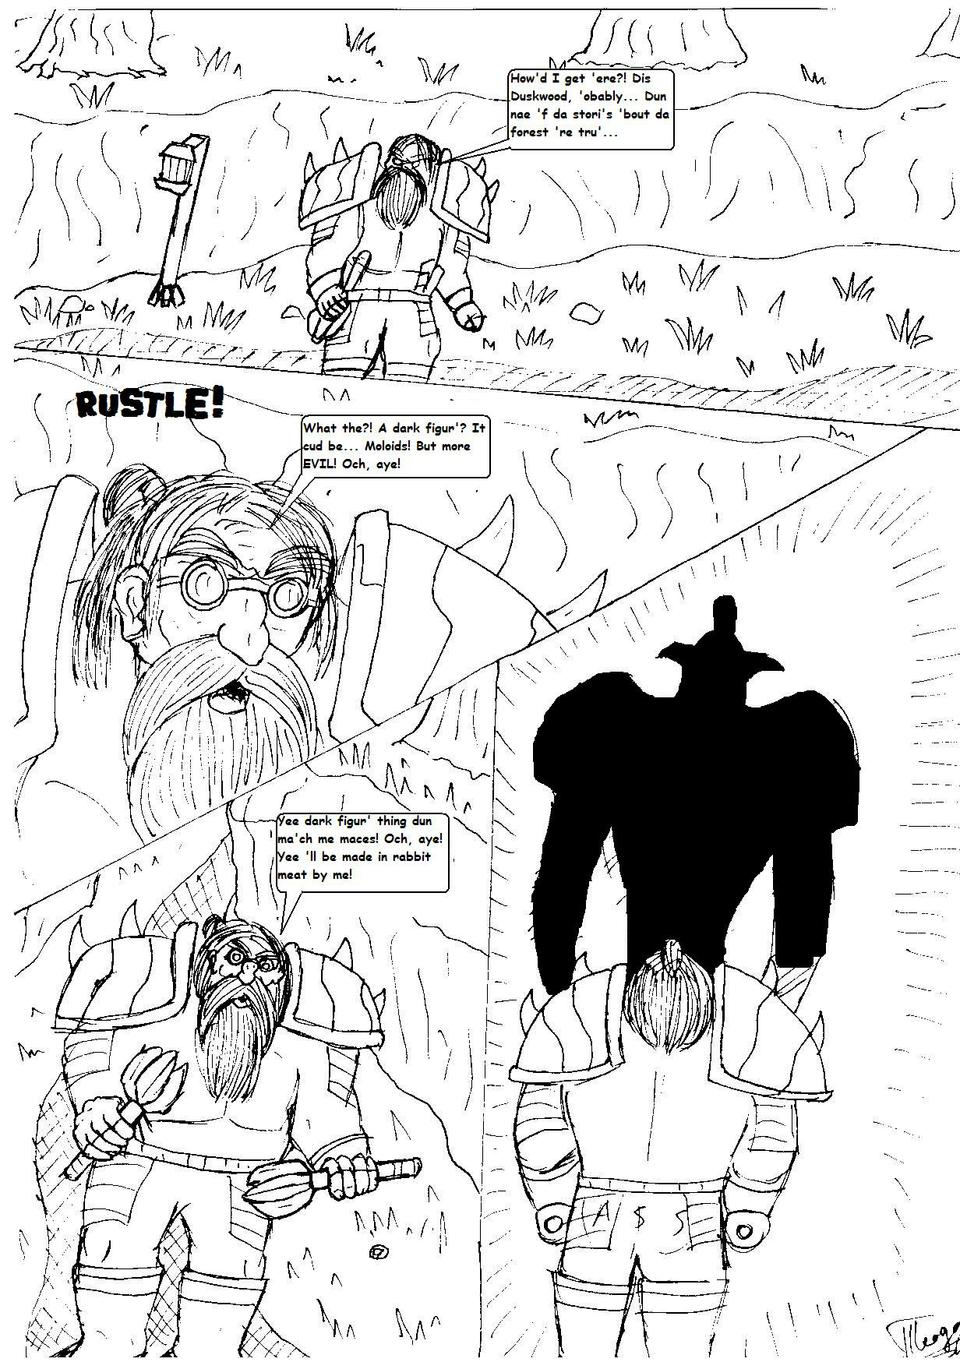 Page 49 - Back to a familiar dwarf